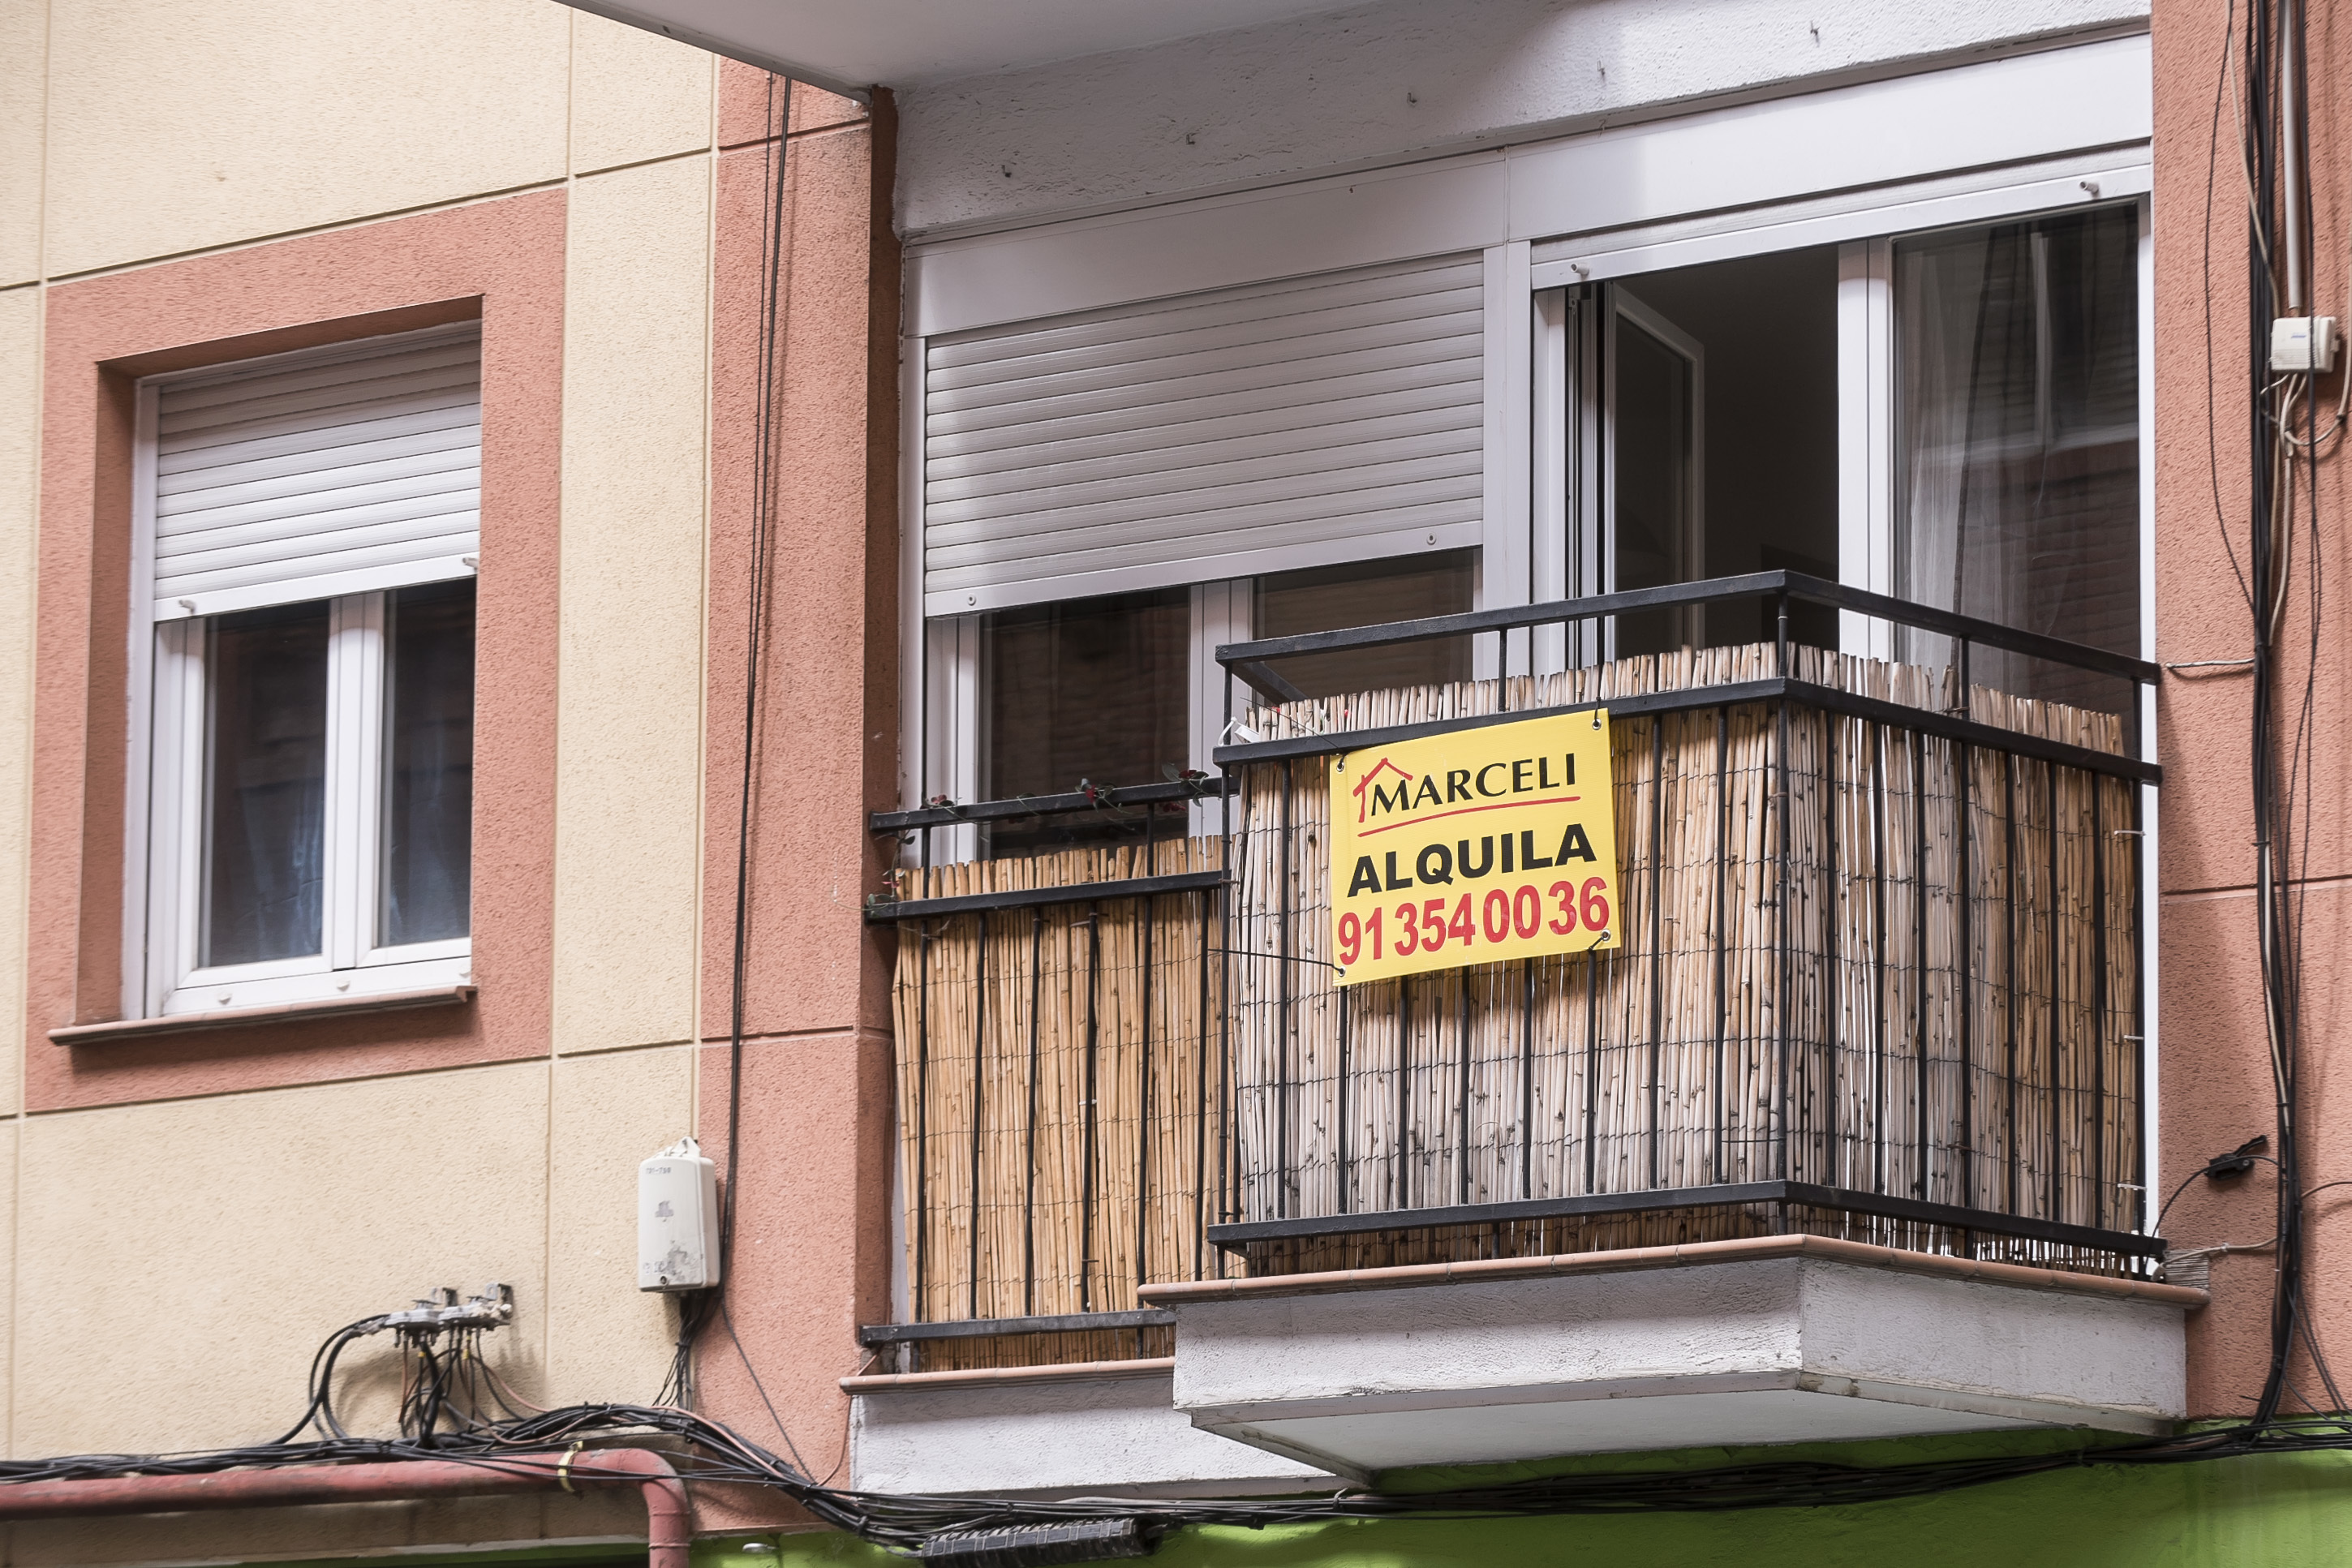 Cartel de alquiler en una vivienda de Madrid.